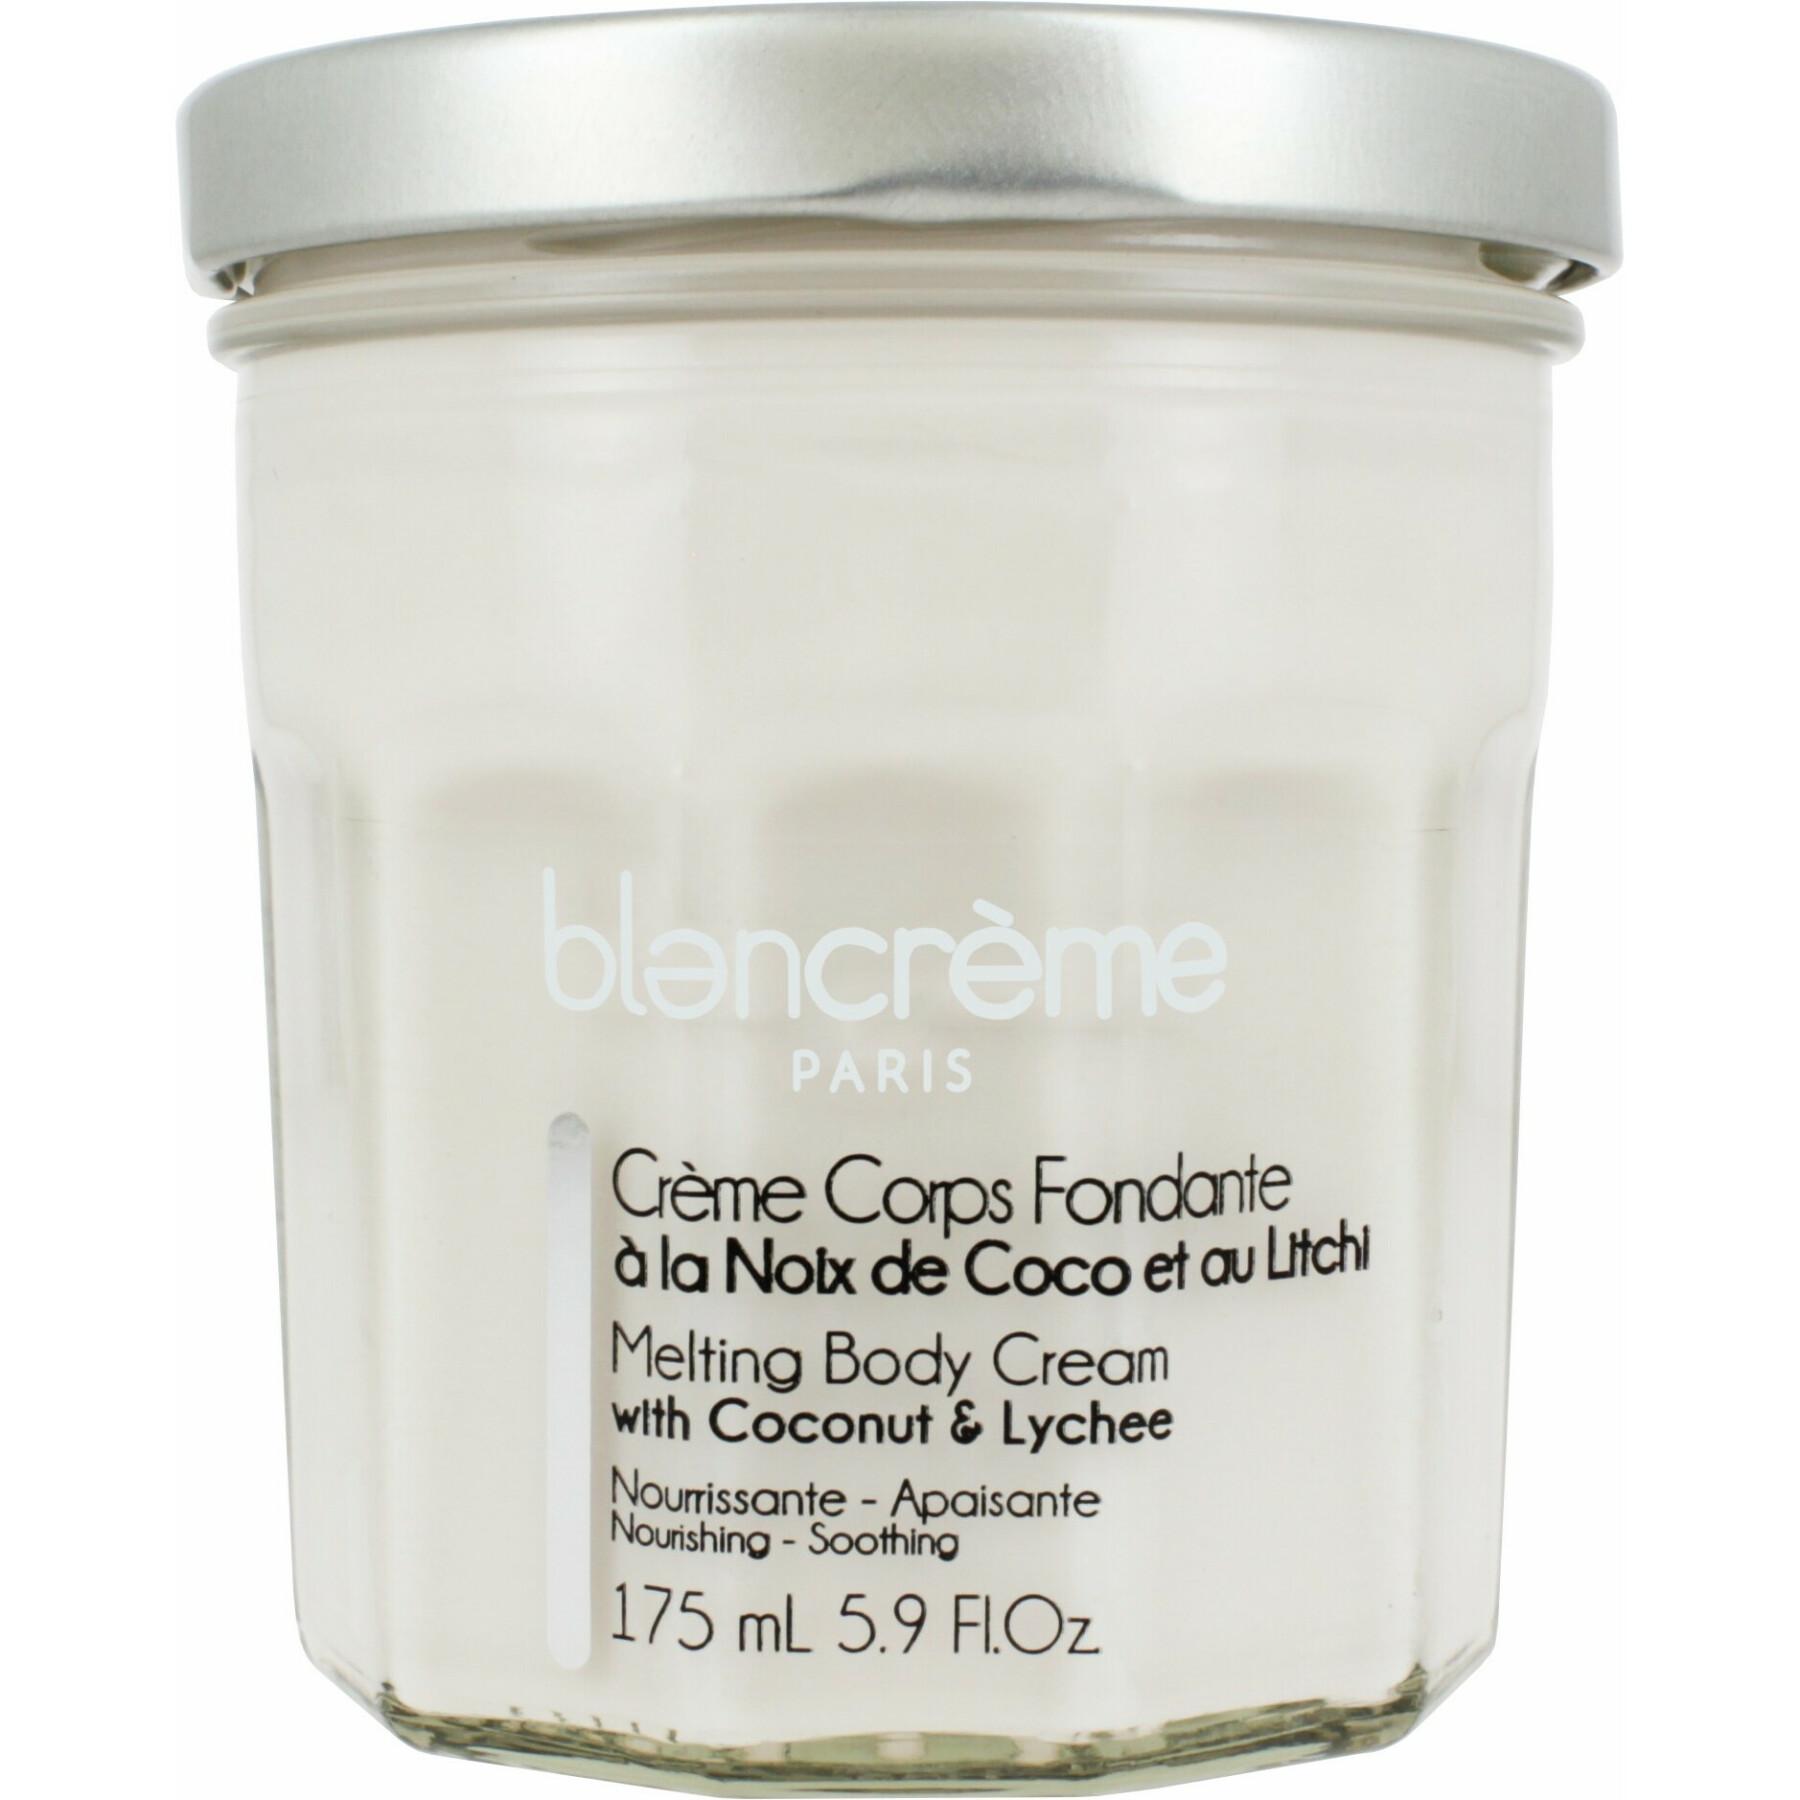 Crema corporal - coco y lichi - Blancreme 175 ml